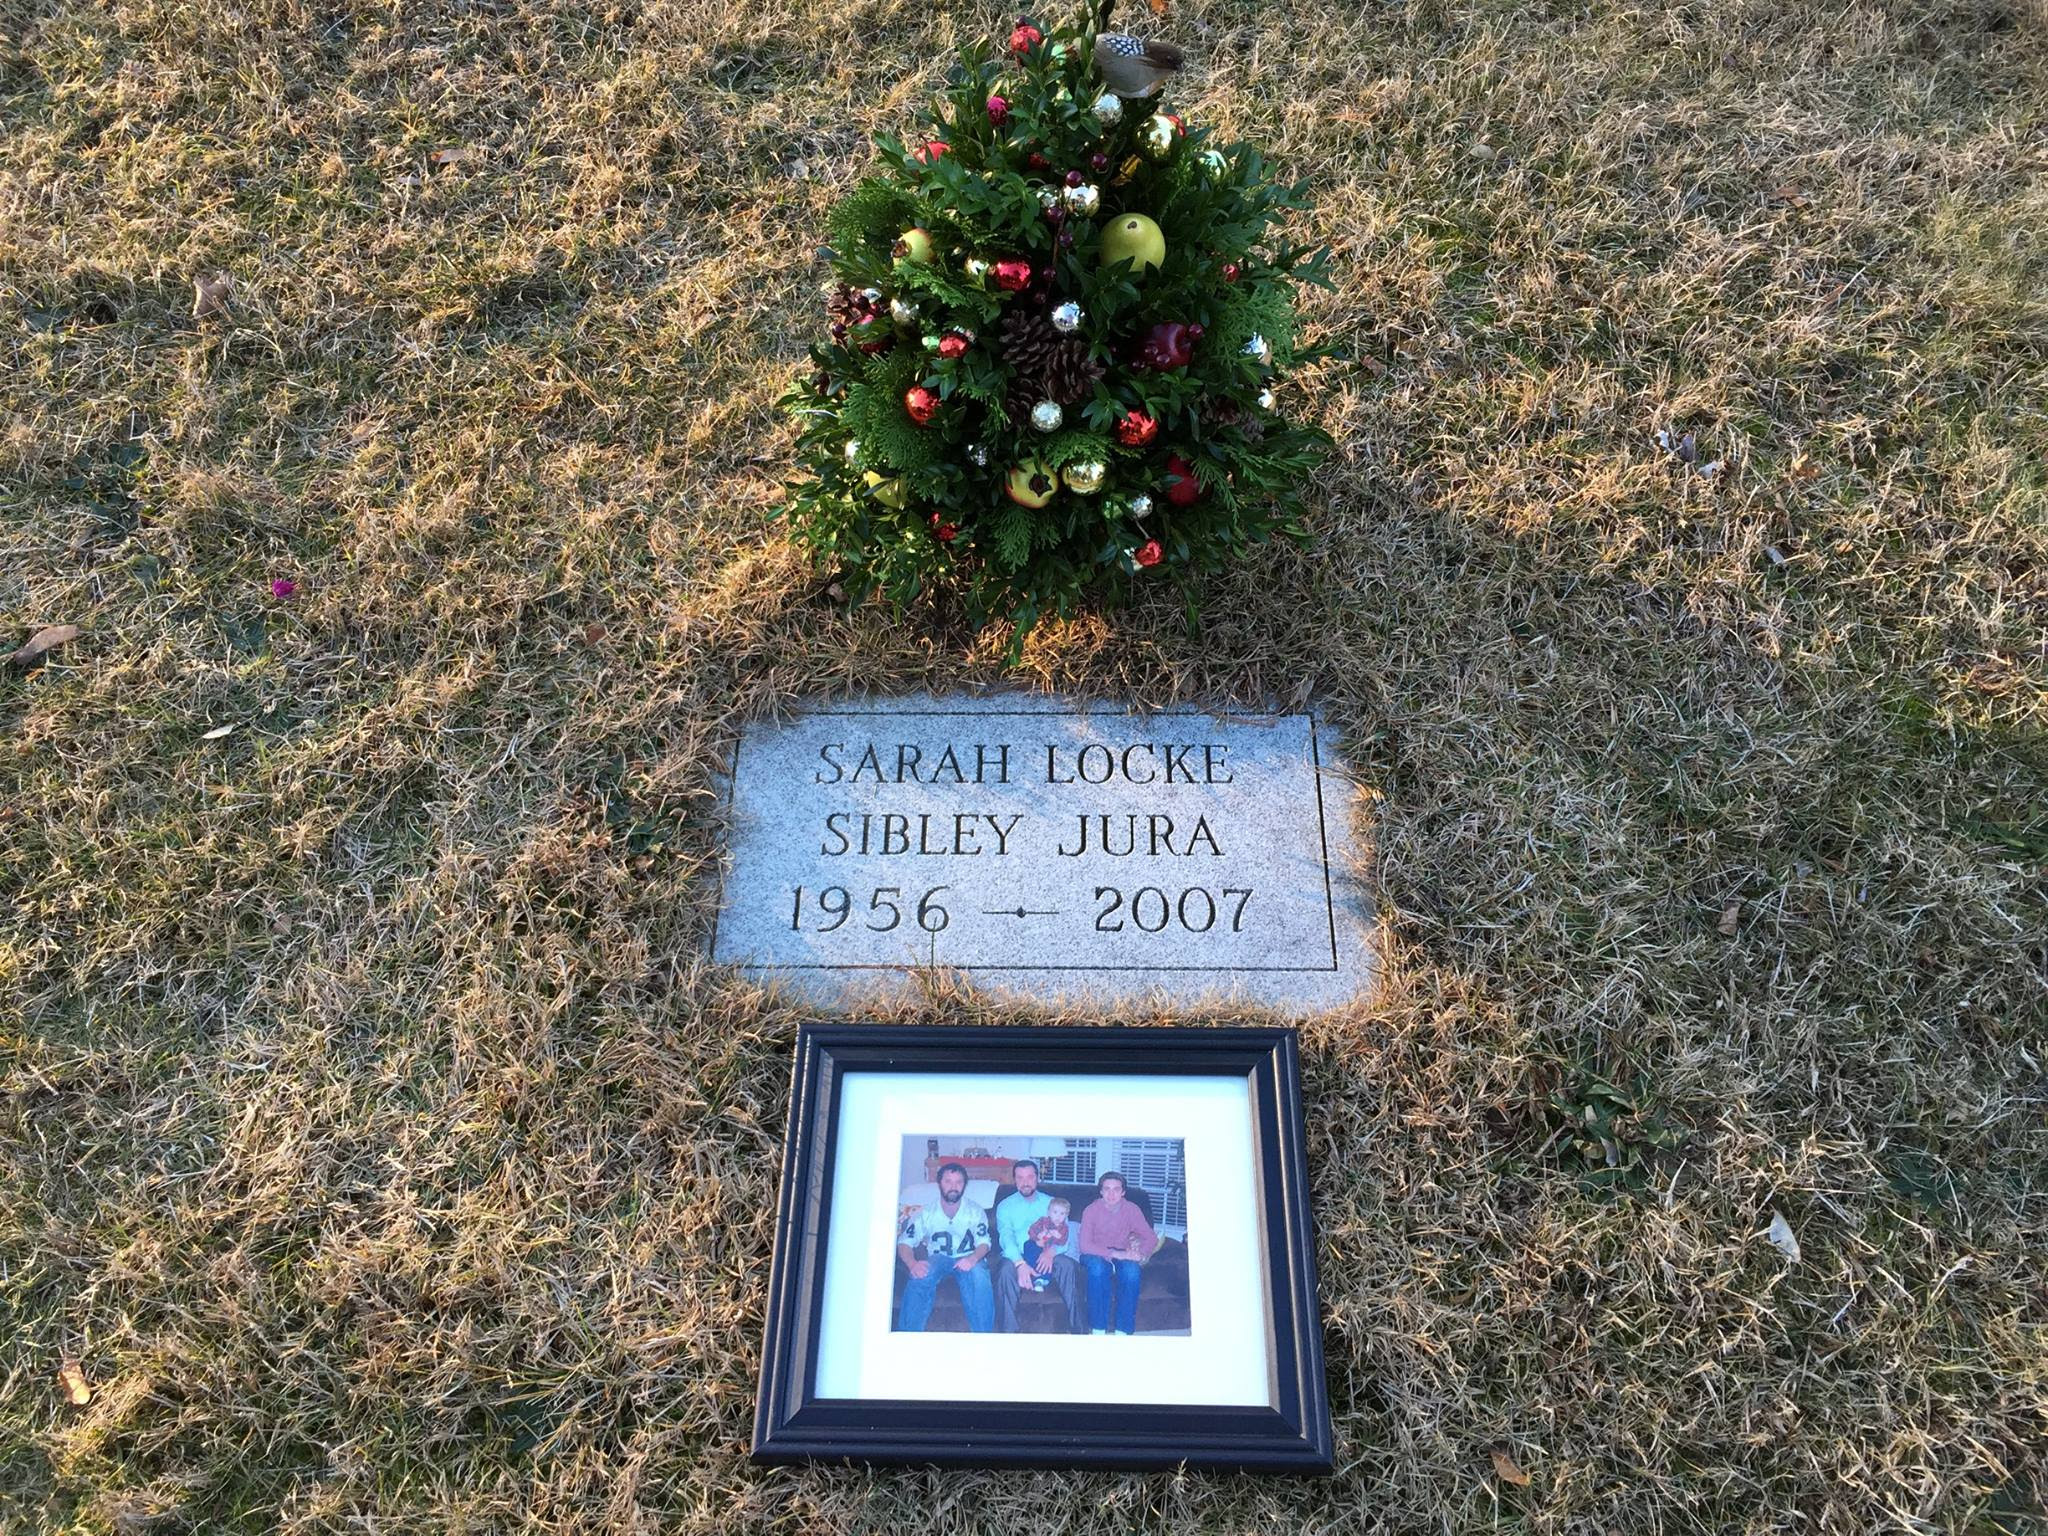 Jura family photo next to Sarah's grave.